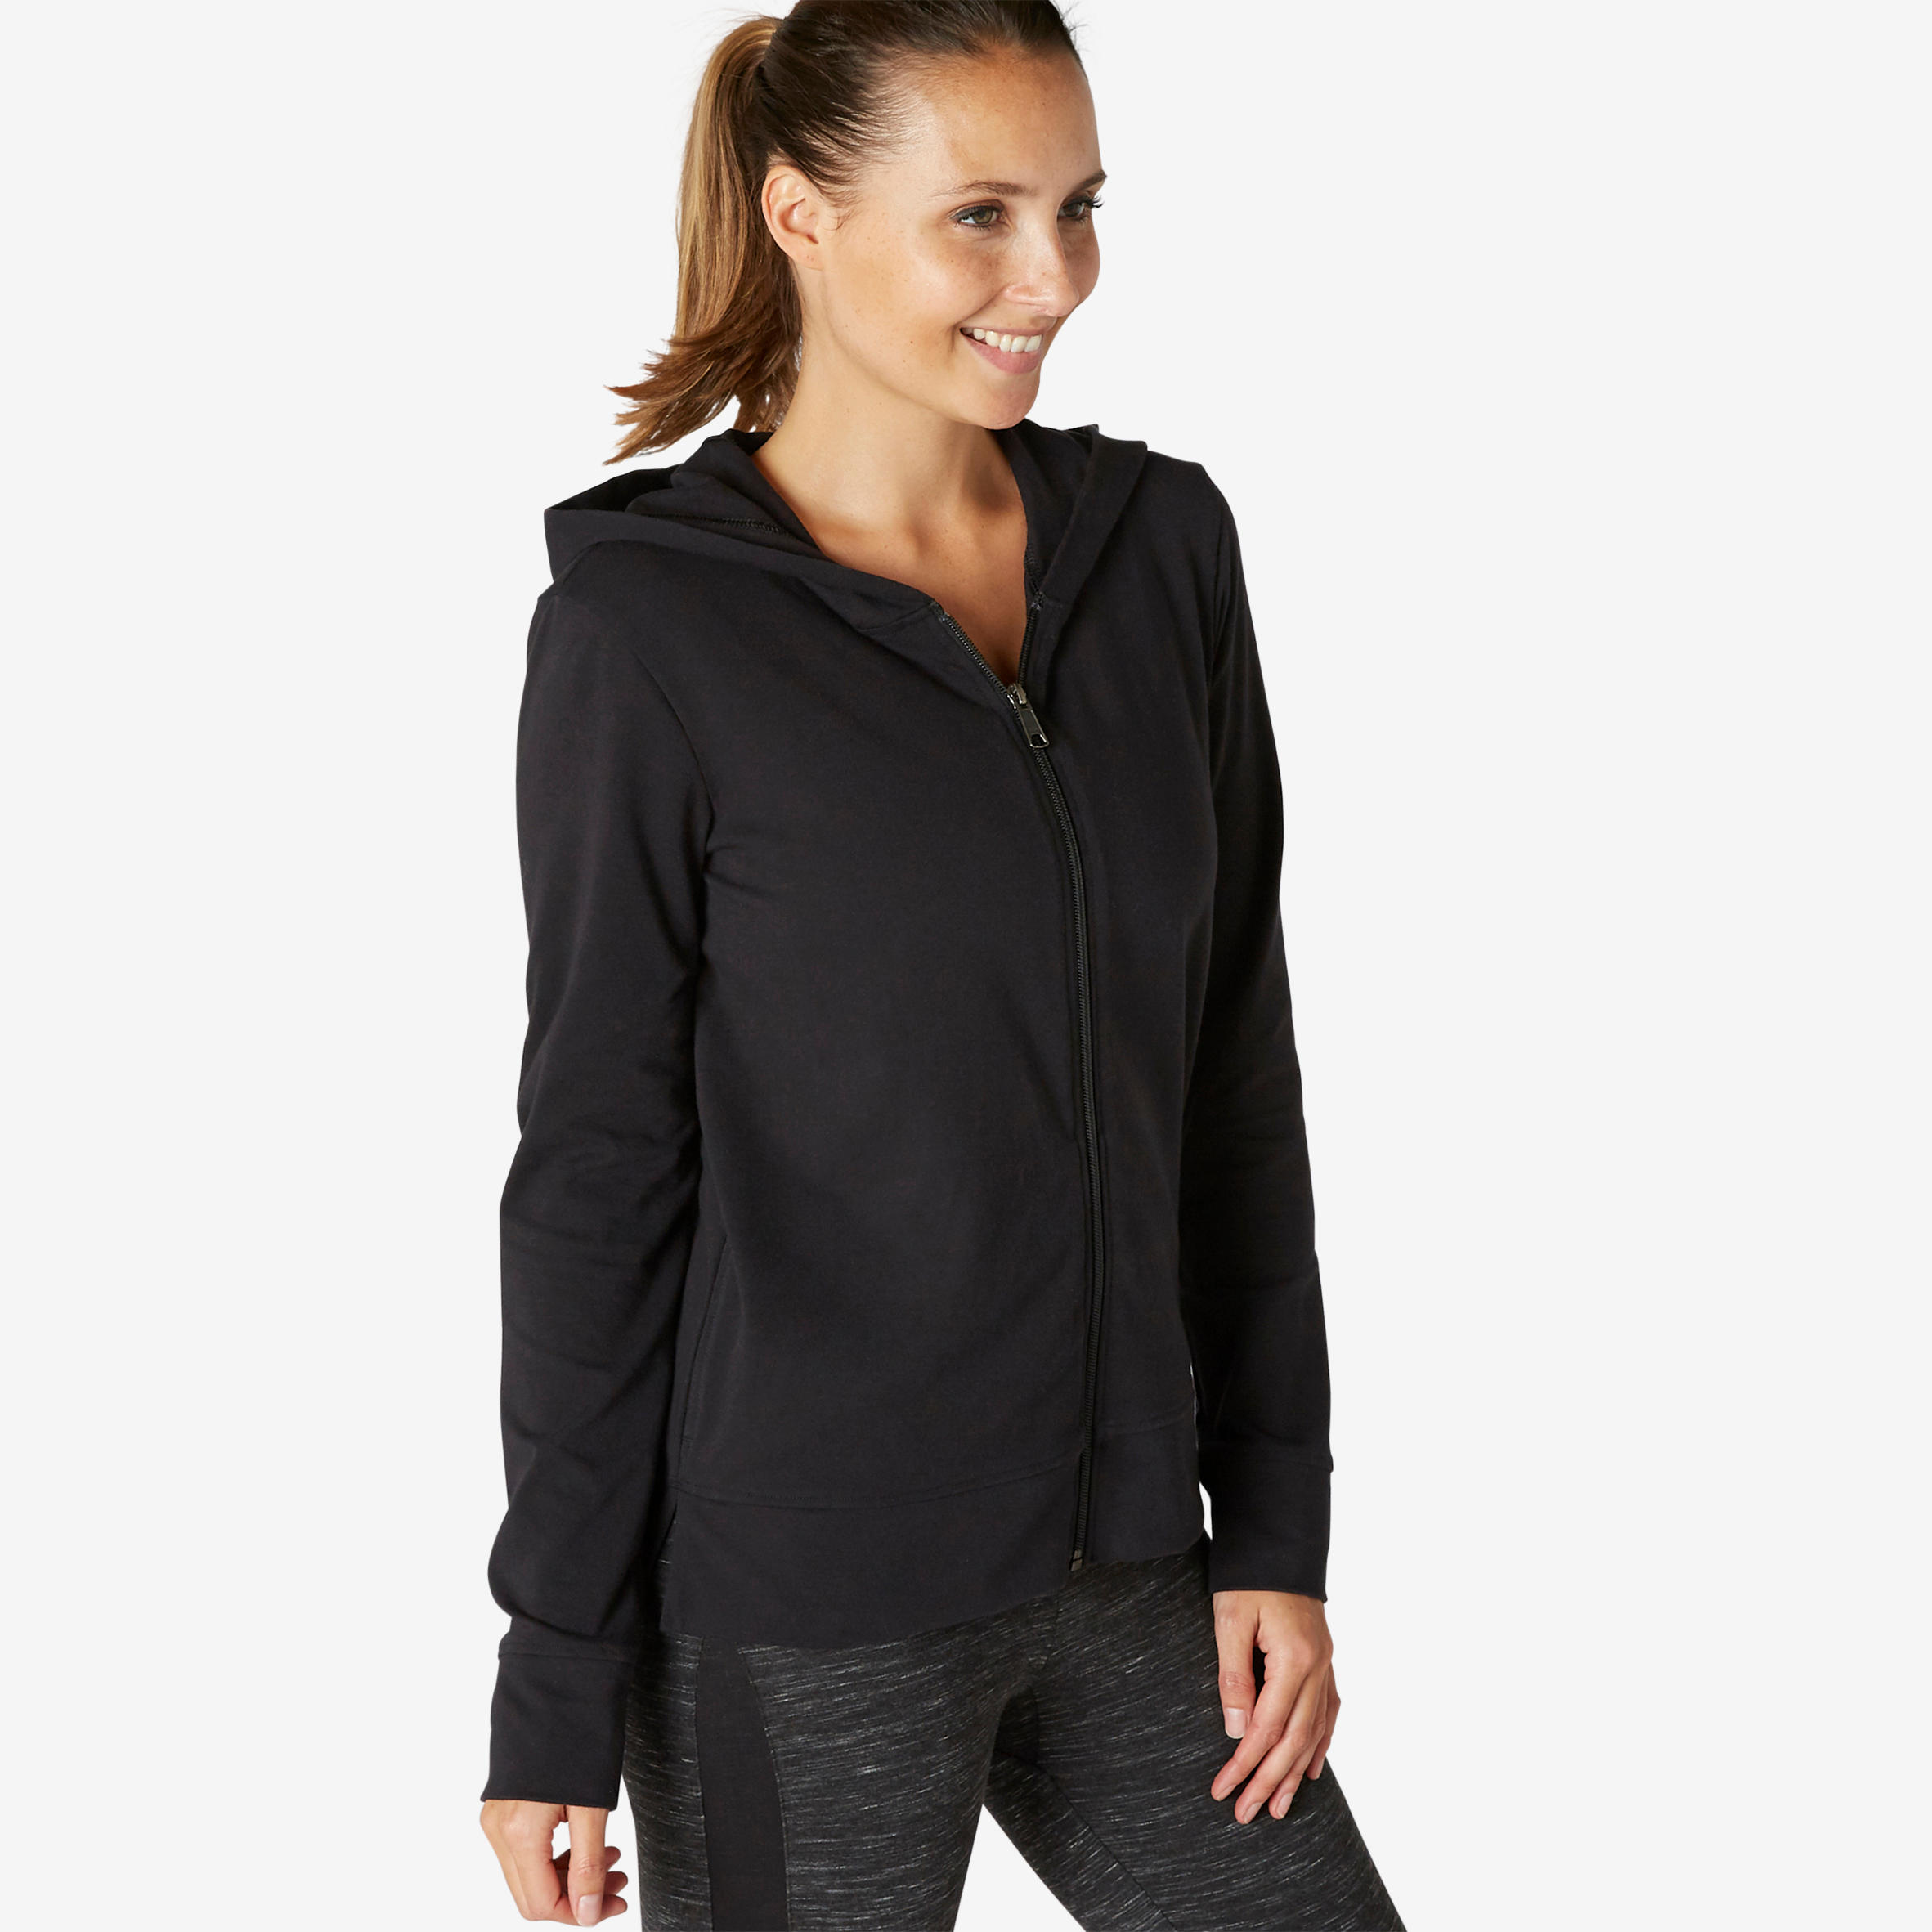 Women Sweatshirt Jacket With Hoodie For Gym 100-Black